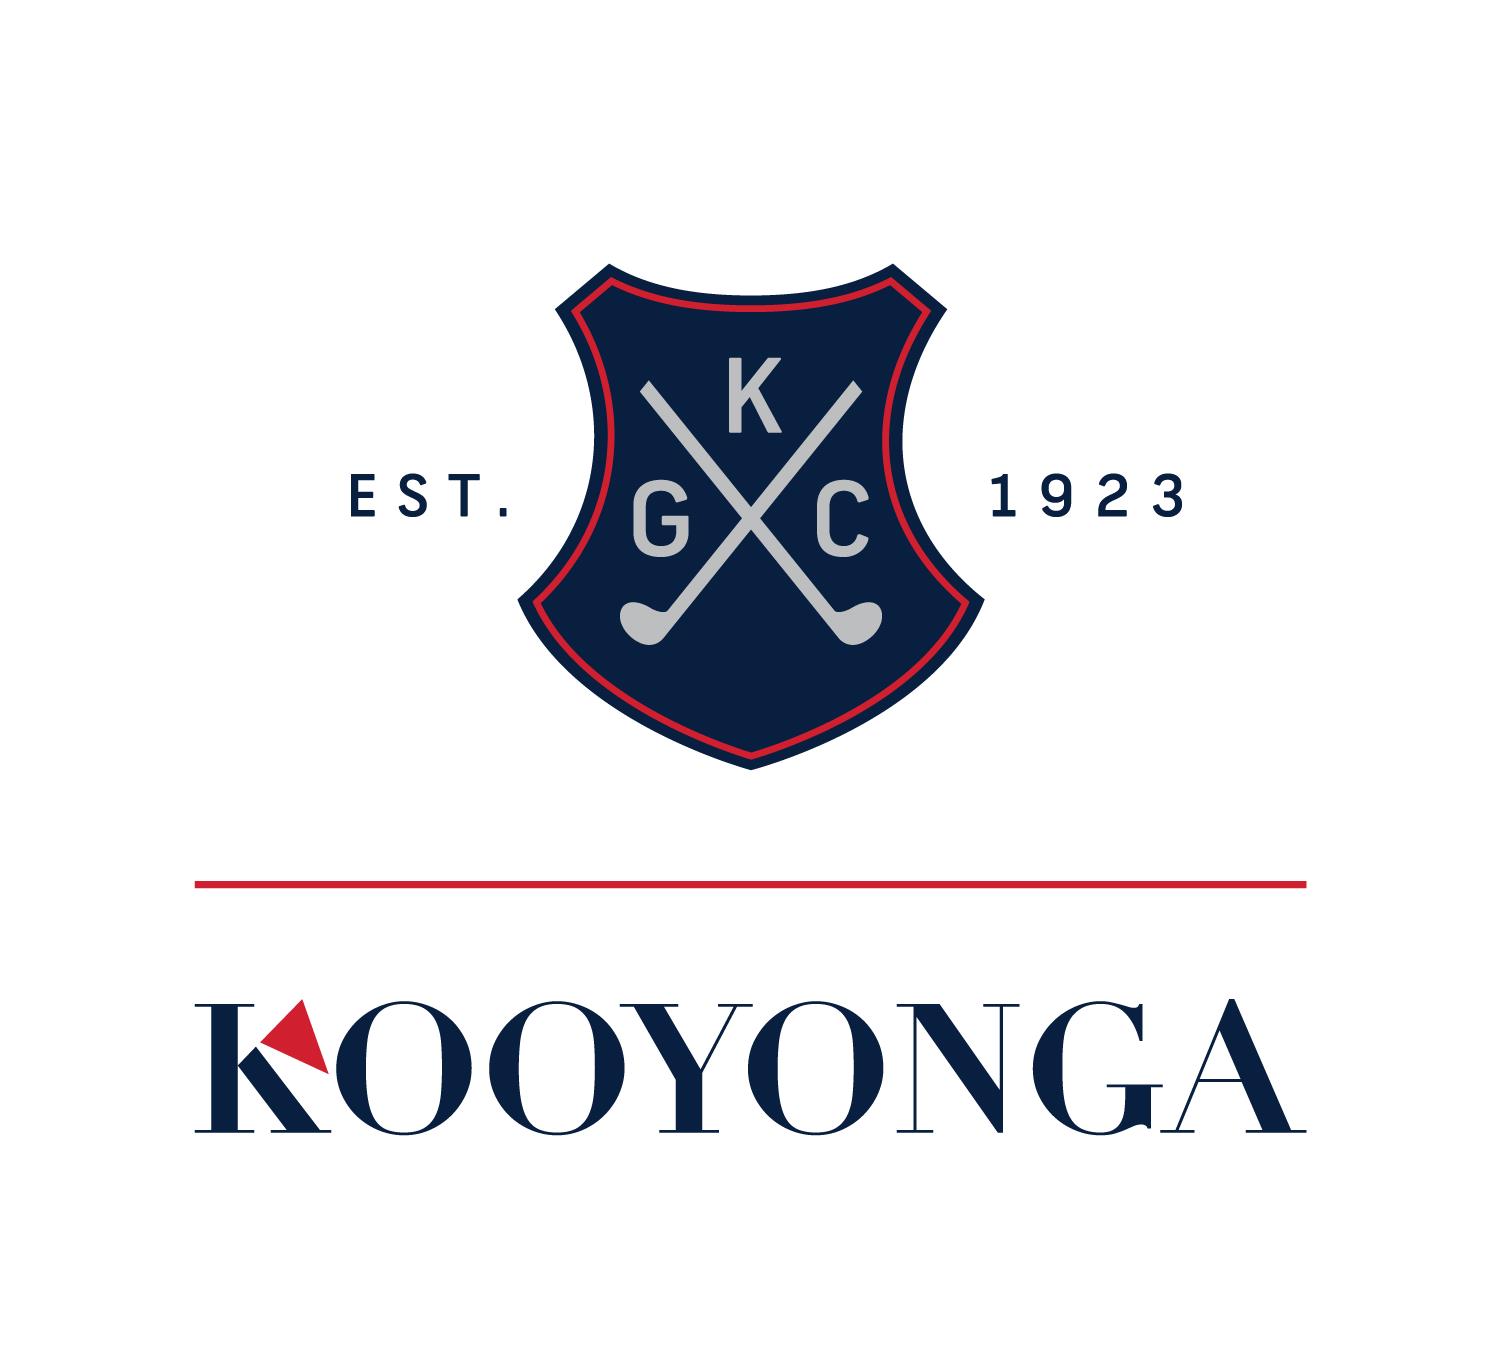 The Kooyonga Golf Club Incorporated